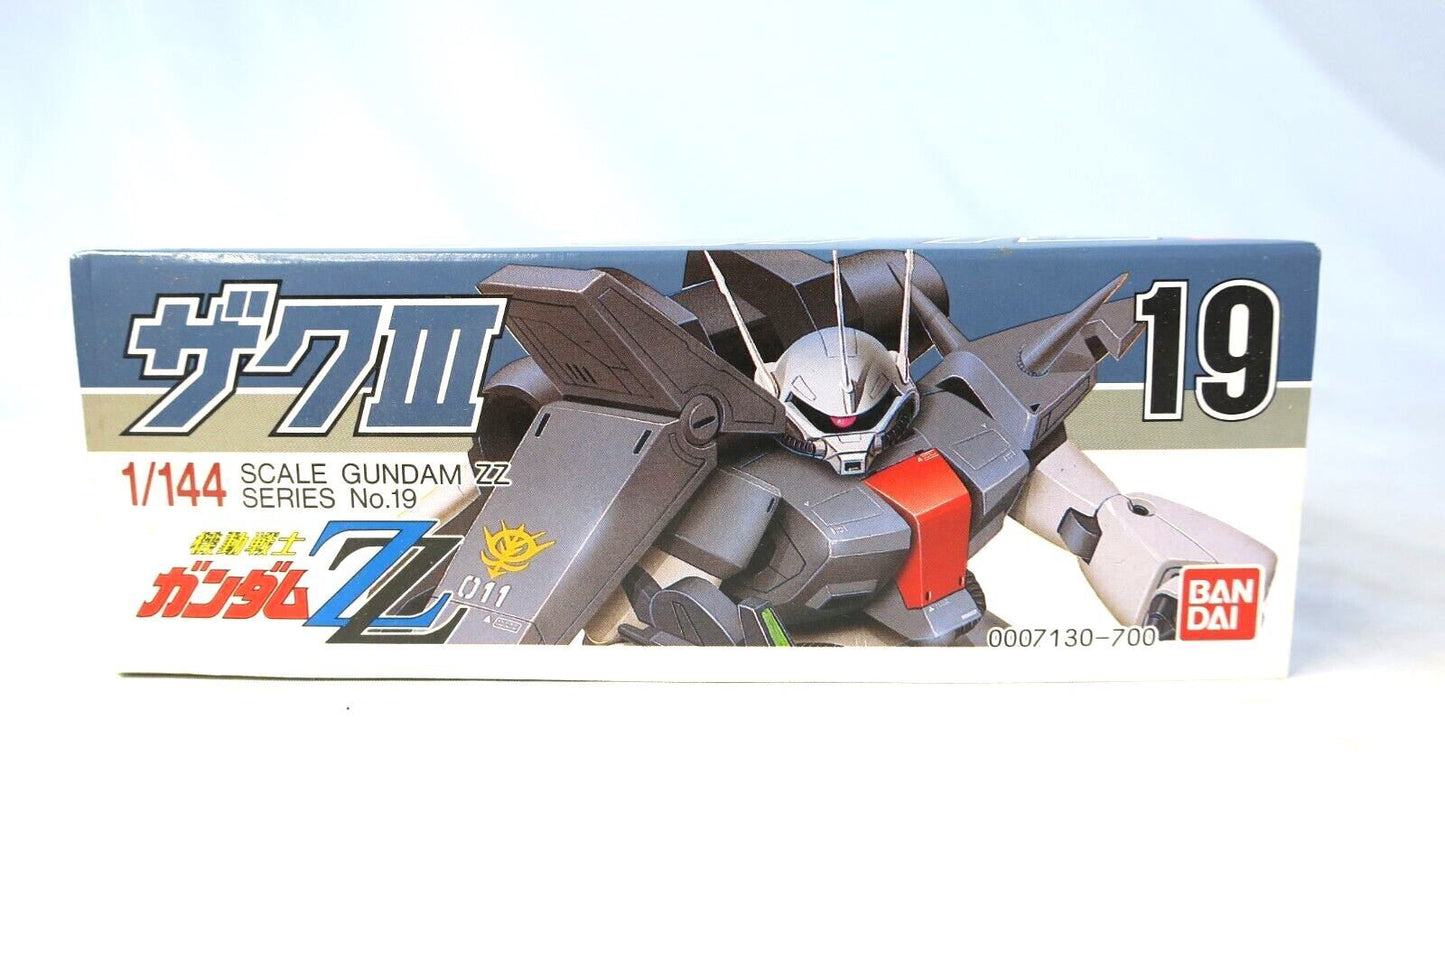 Bandai Gundam ZZ Zaku III AMX-011 1/144 anime mech Model Kit  0007130 (C13)